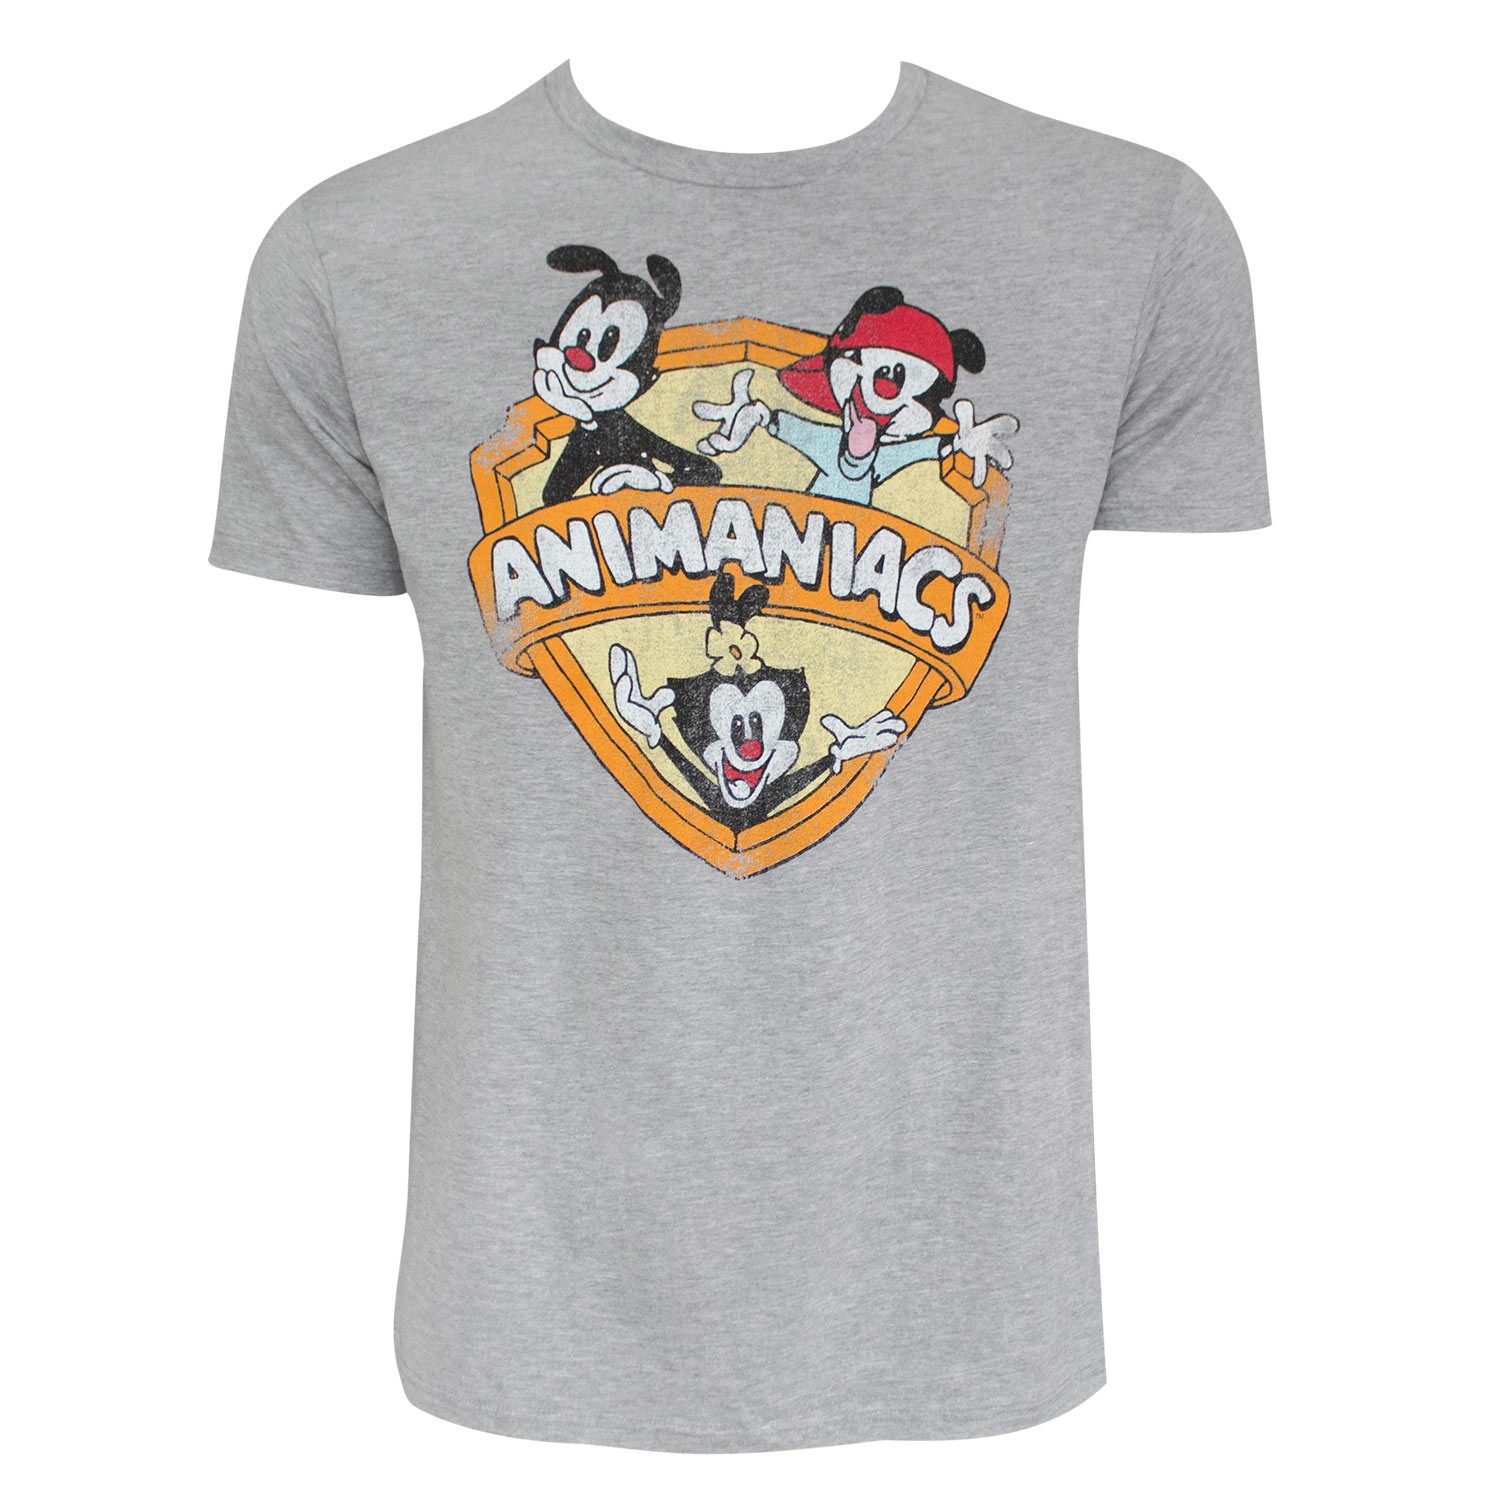 Animaniacs Logo Grey Tee Shirt